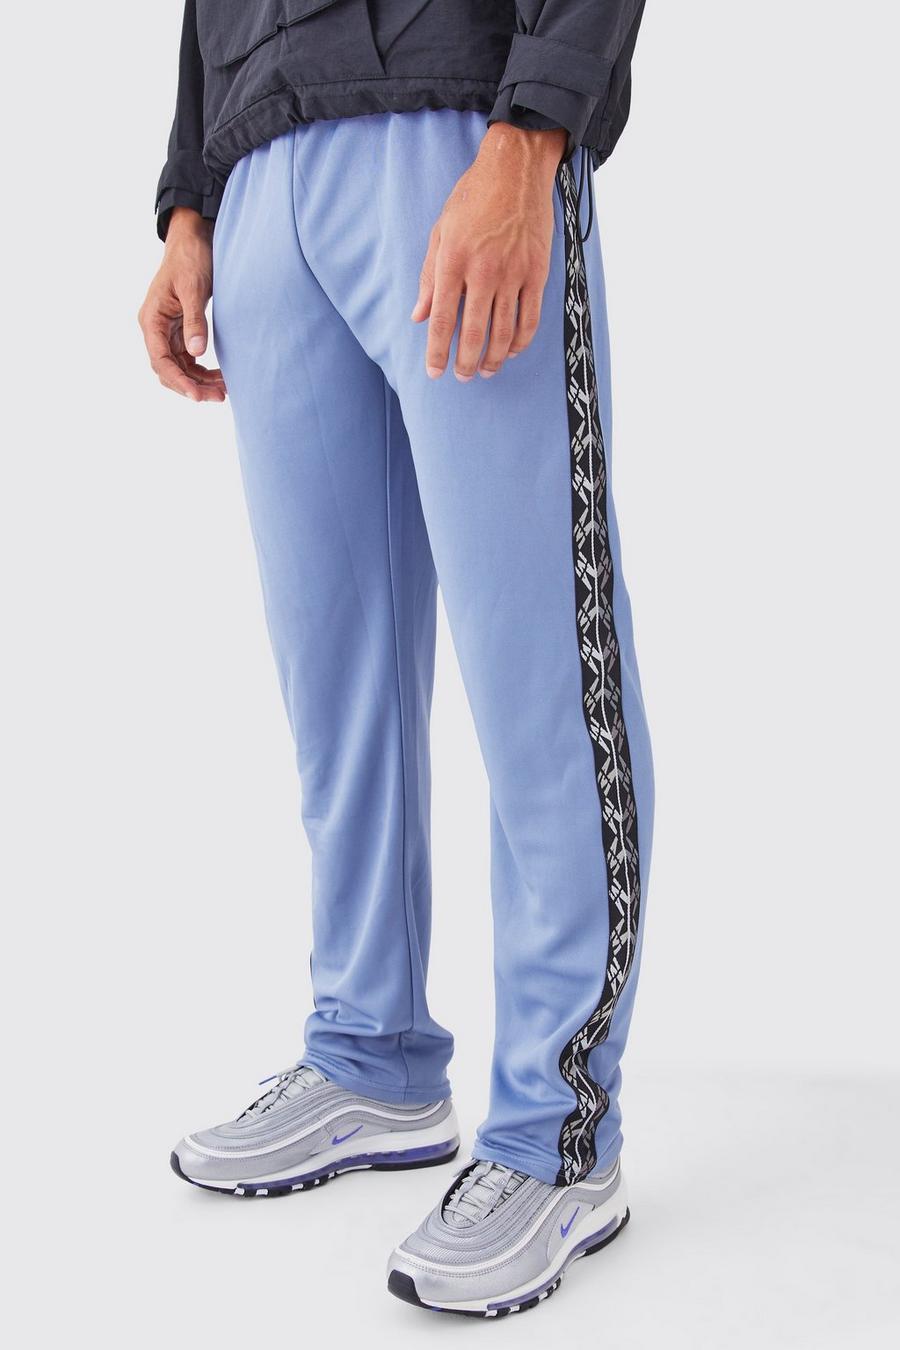 Pantalón deportivo Regular de tejido por urdimbre con franja lateral, Slate blue